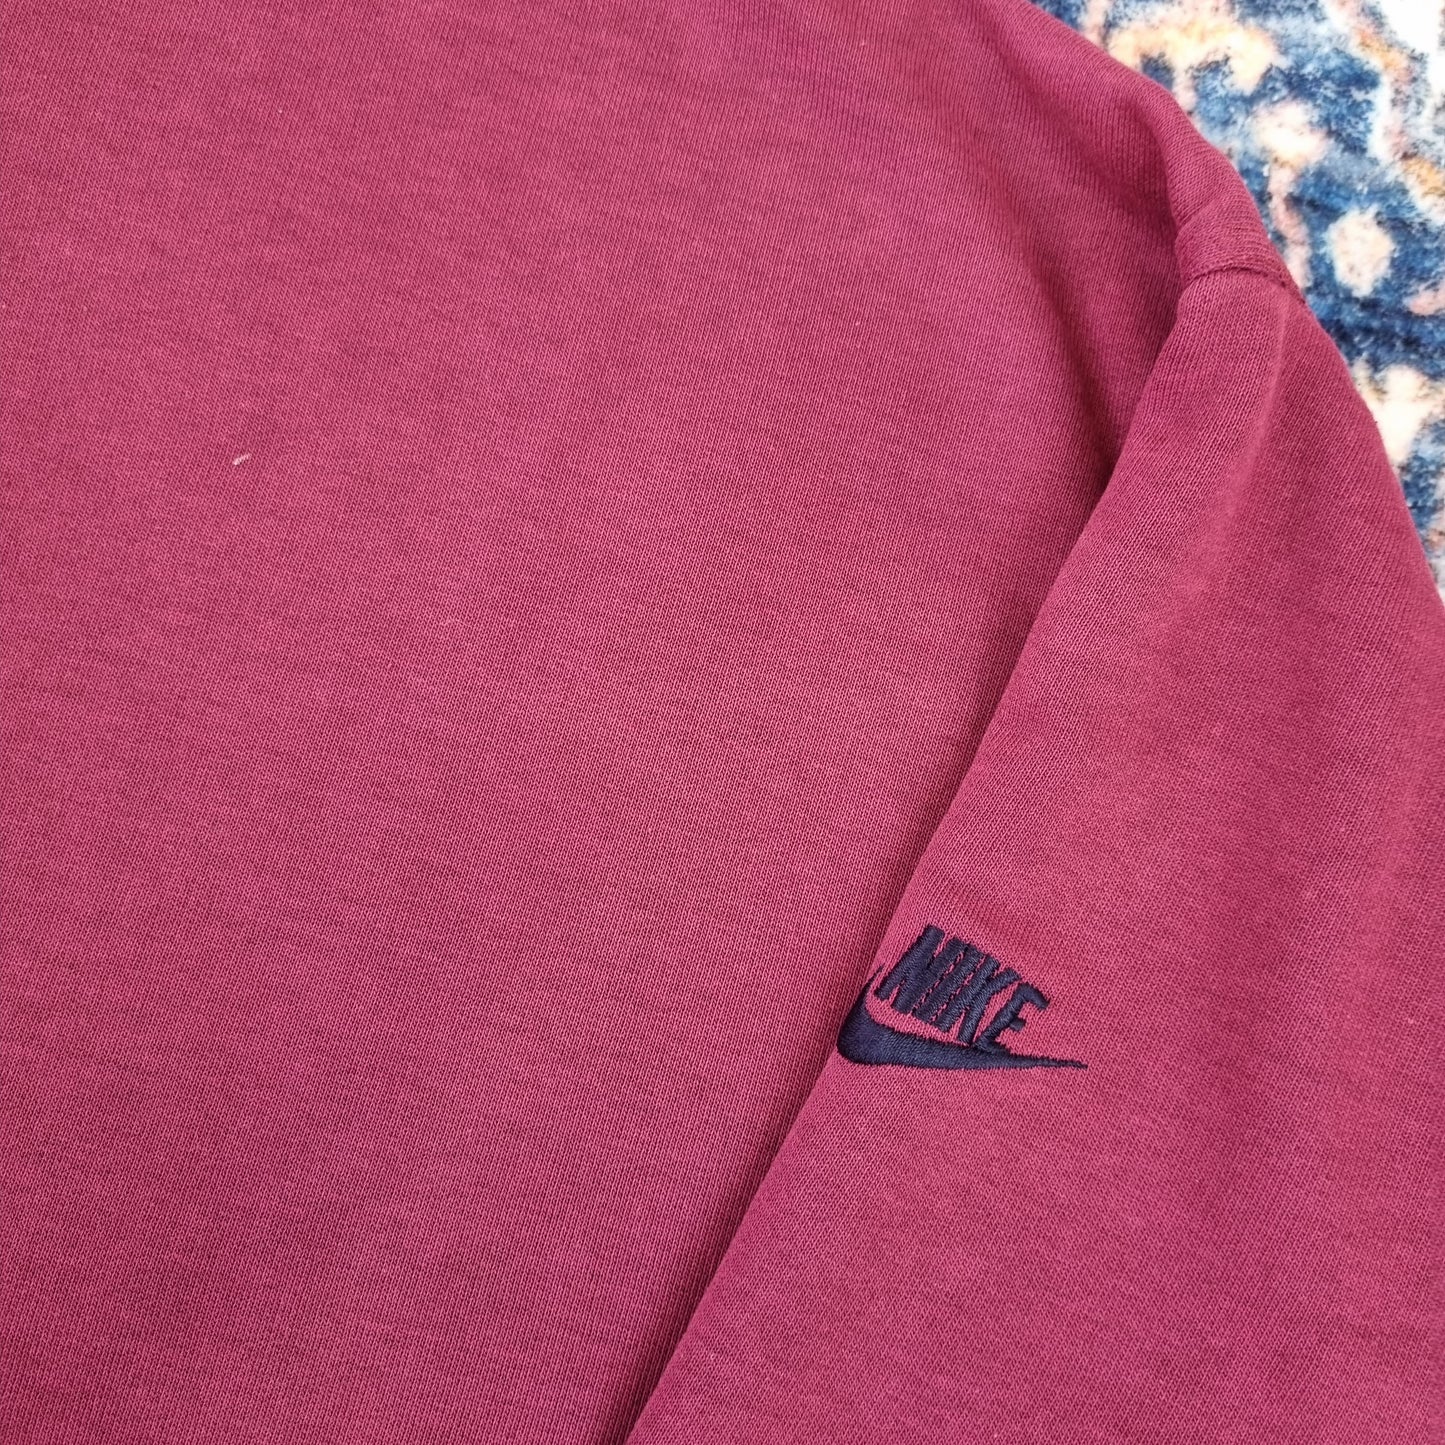 Vintage Nike Sweatshirt (L)